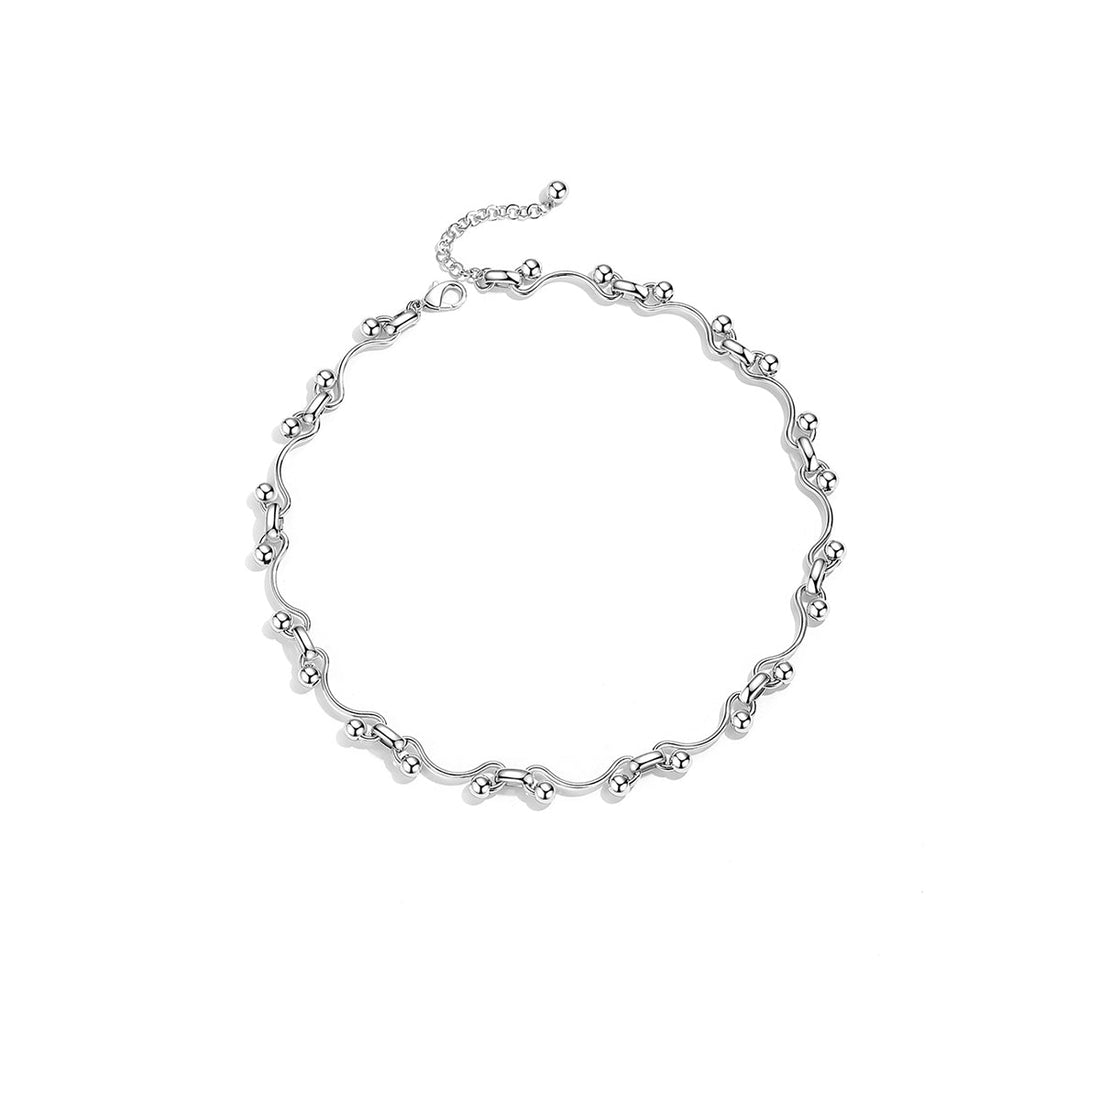 Modern Interlocking Beads Silver Necklace - 0cm